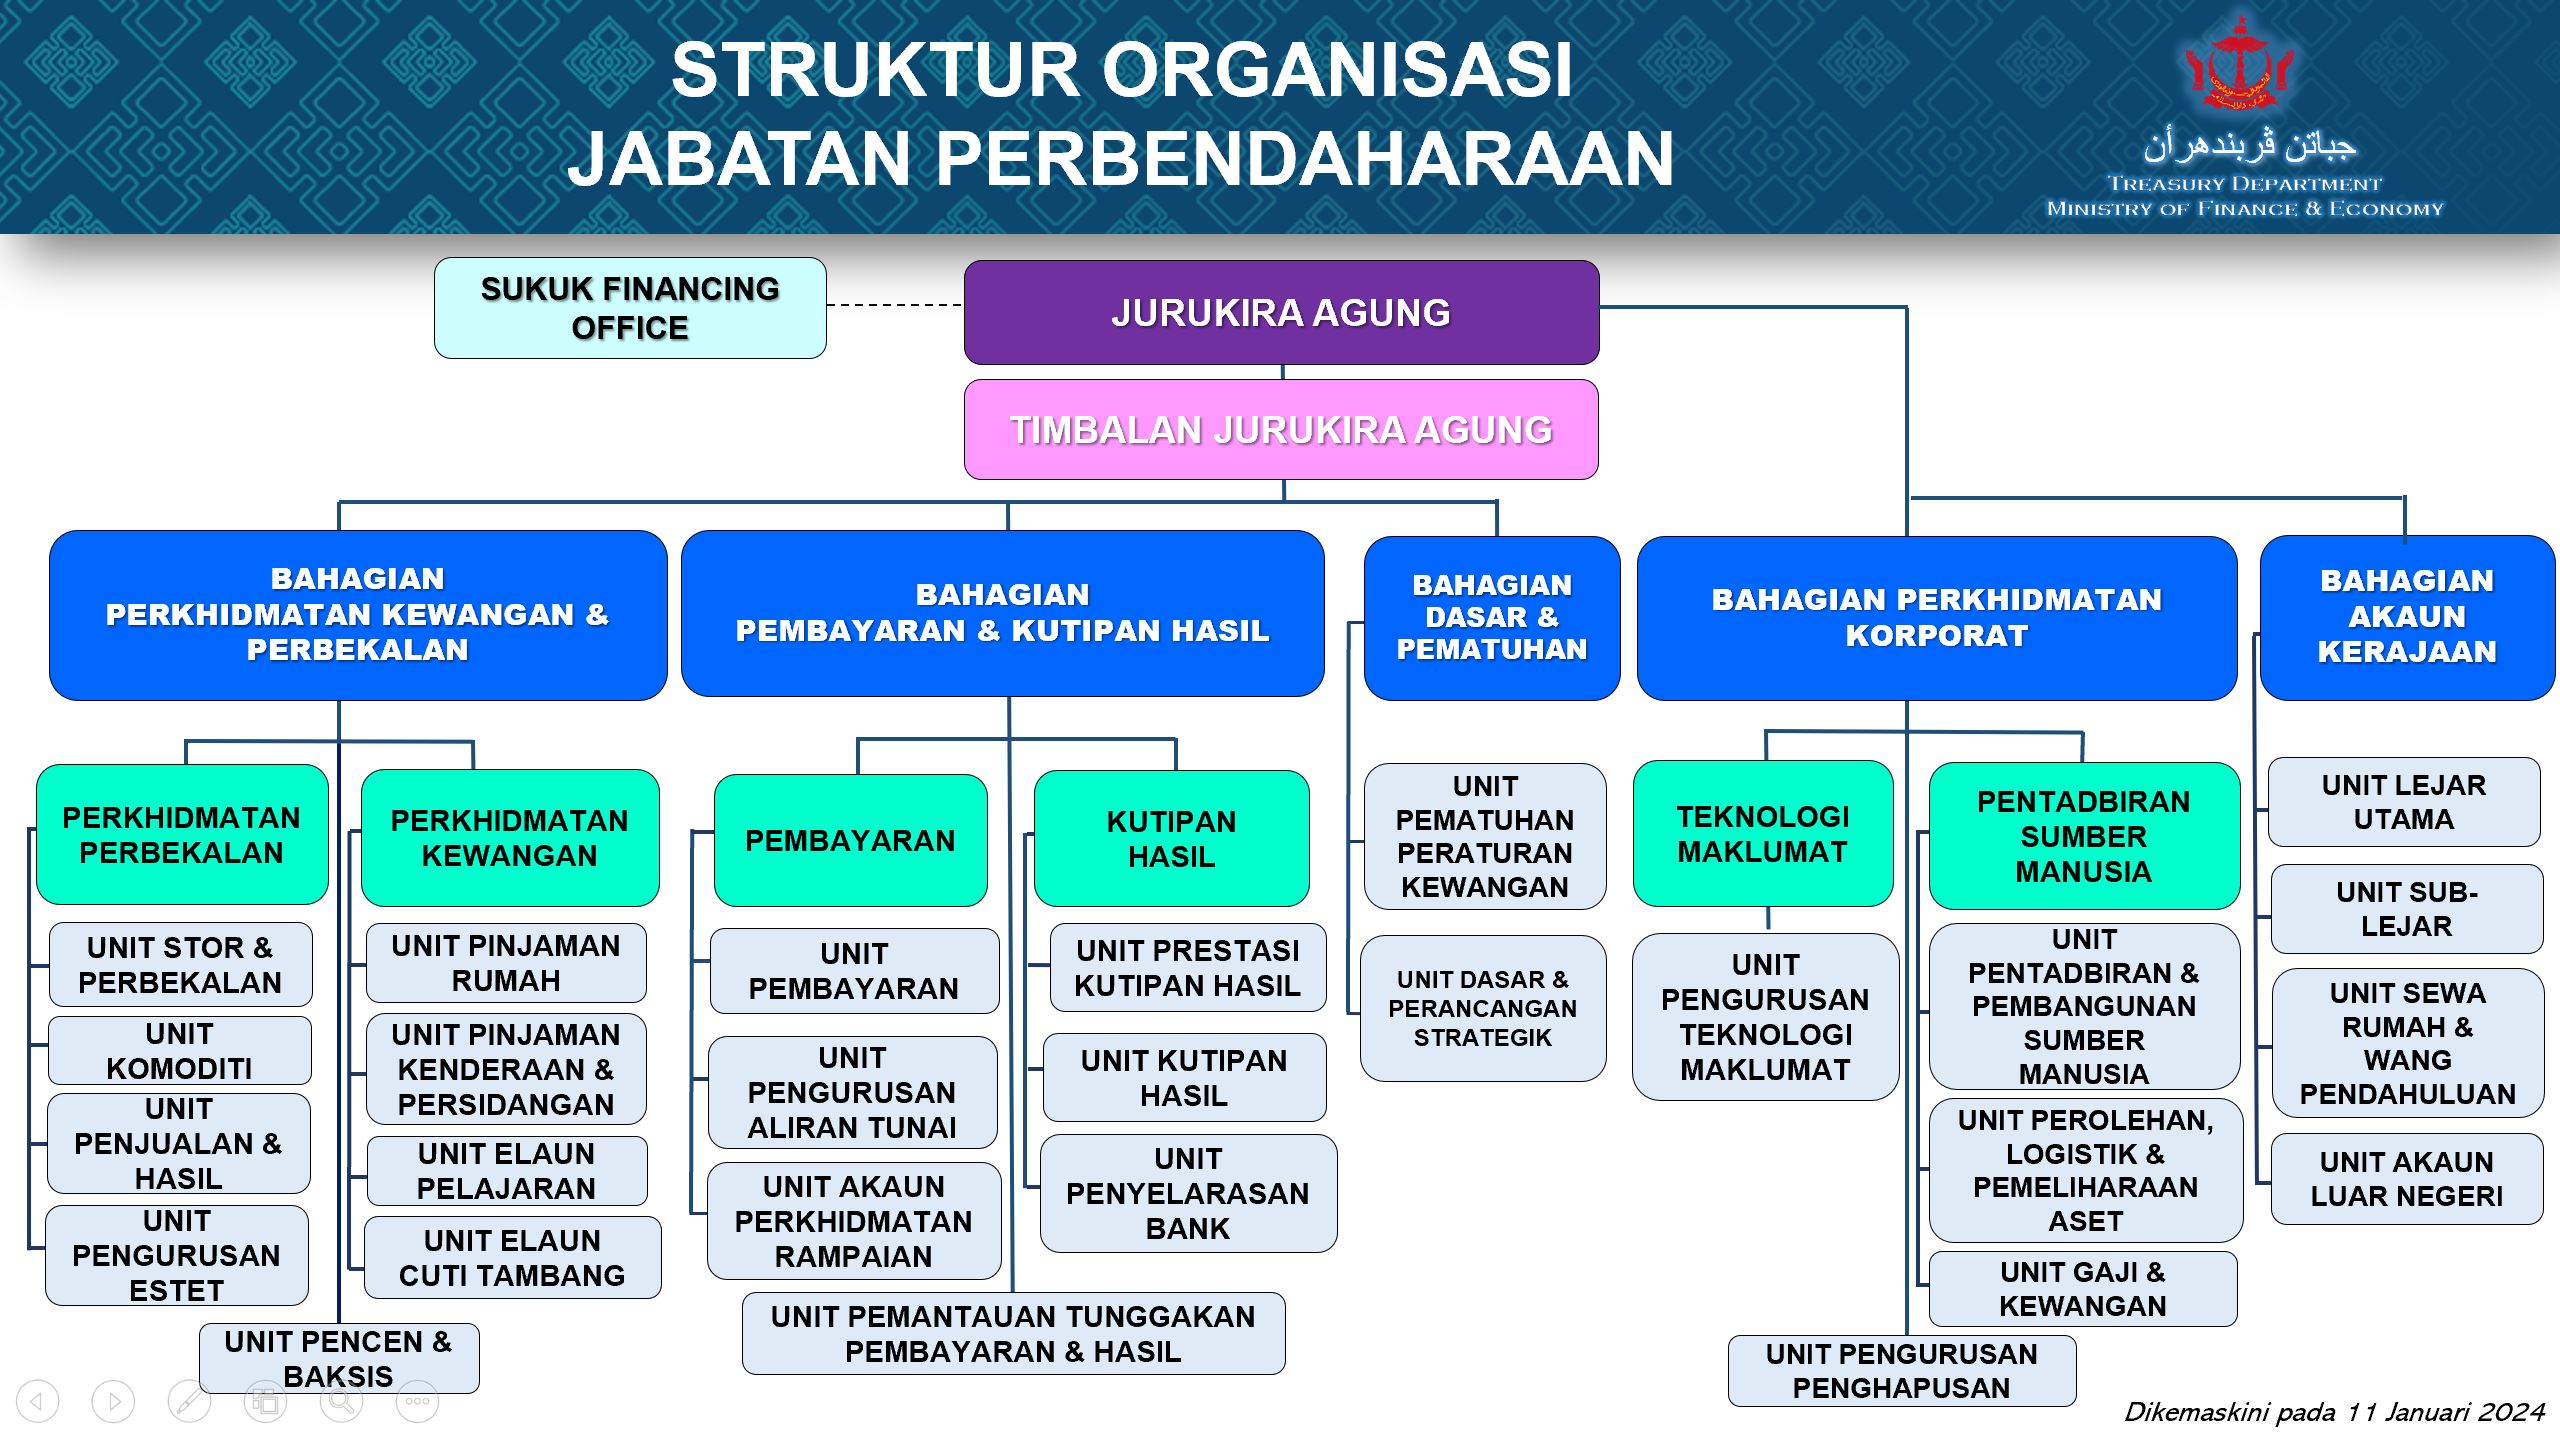 JPKK Organizational Structure - 11Jan24.JPG